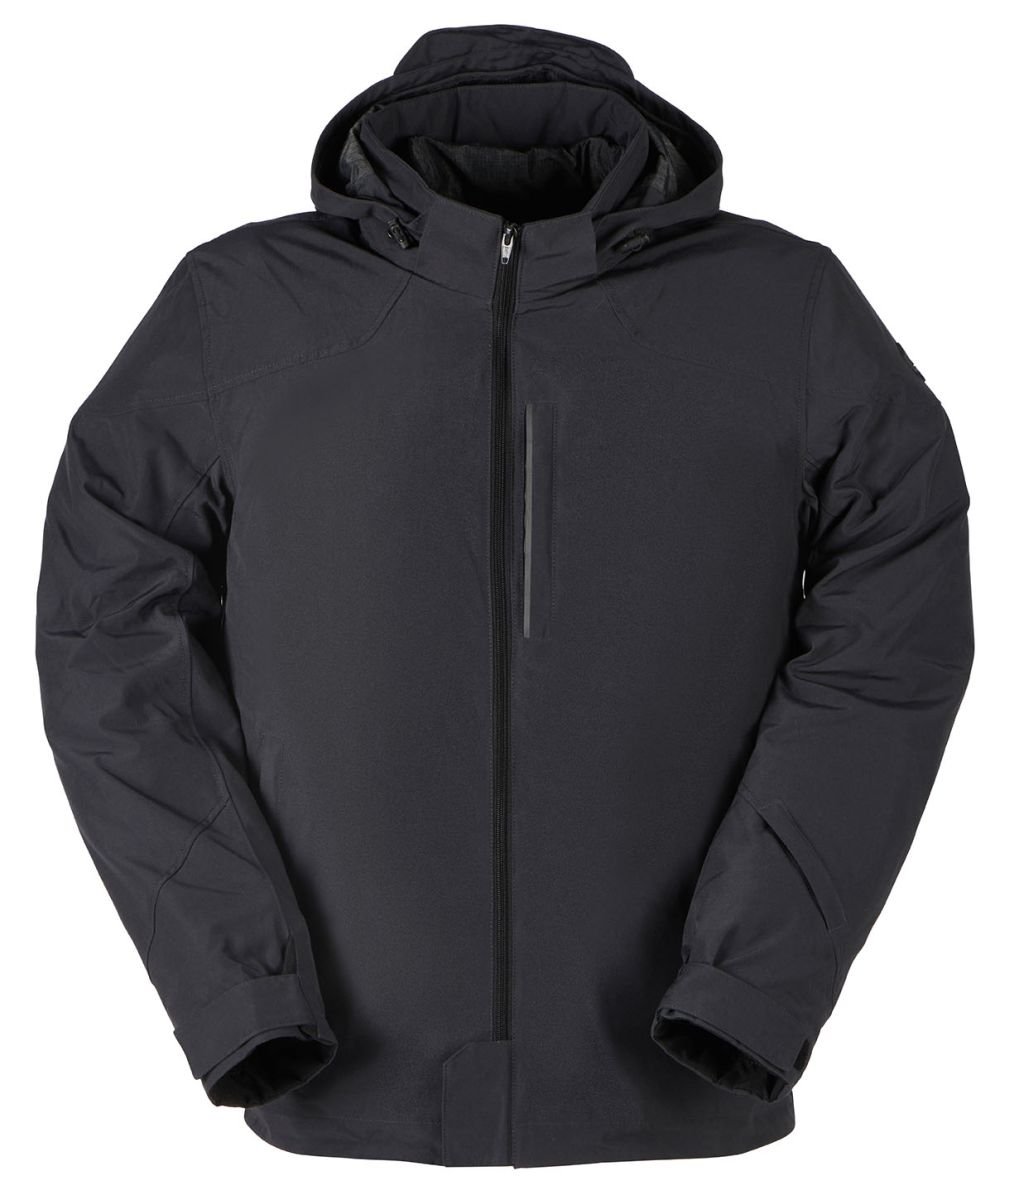 Image of Furygan London Evo 2 Jacket Gray Anthracite Size S EN